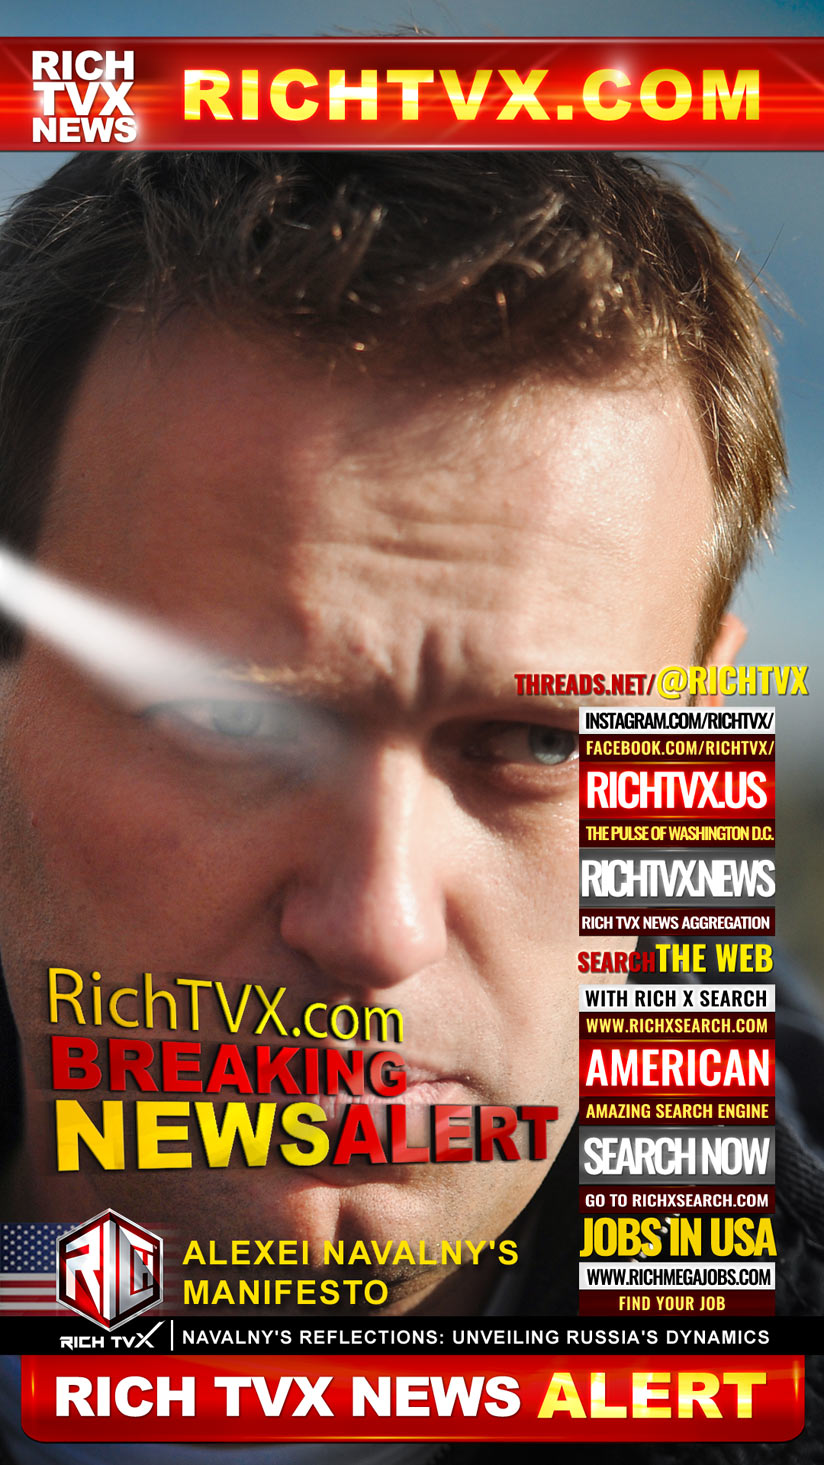 Rich TVX News Network World Exclusive: Alexei Navalny’s Manifesto